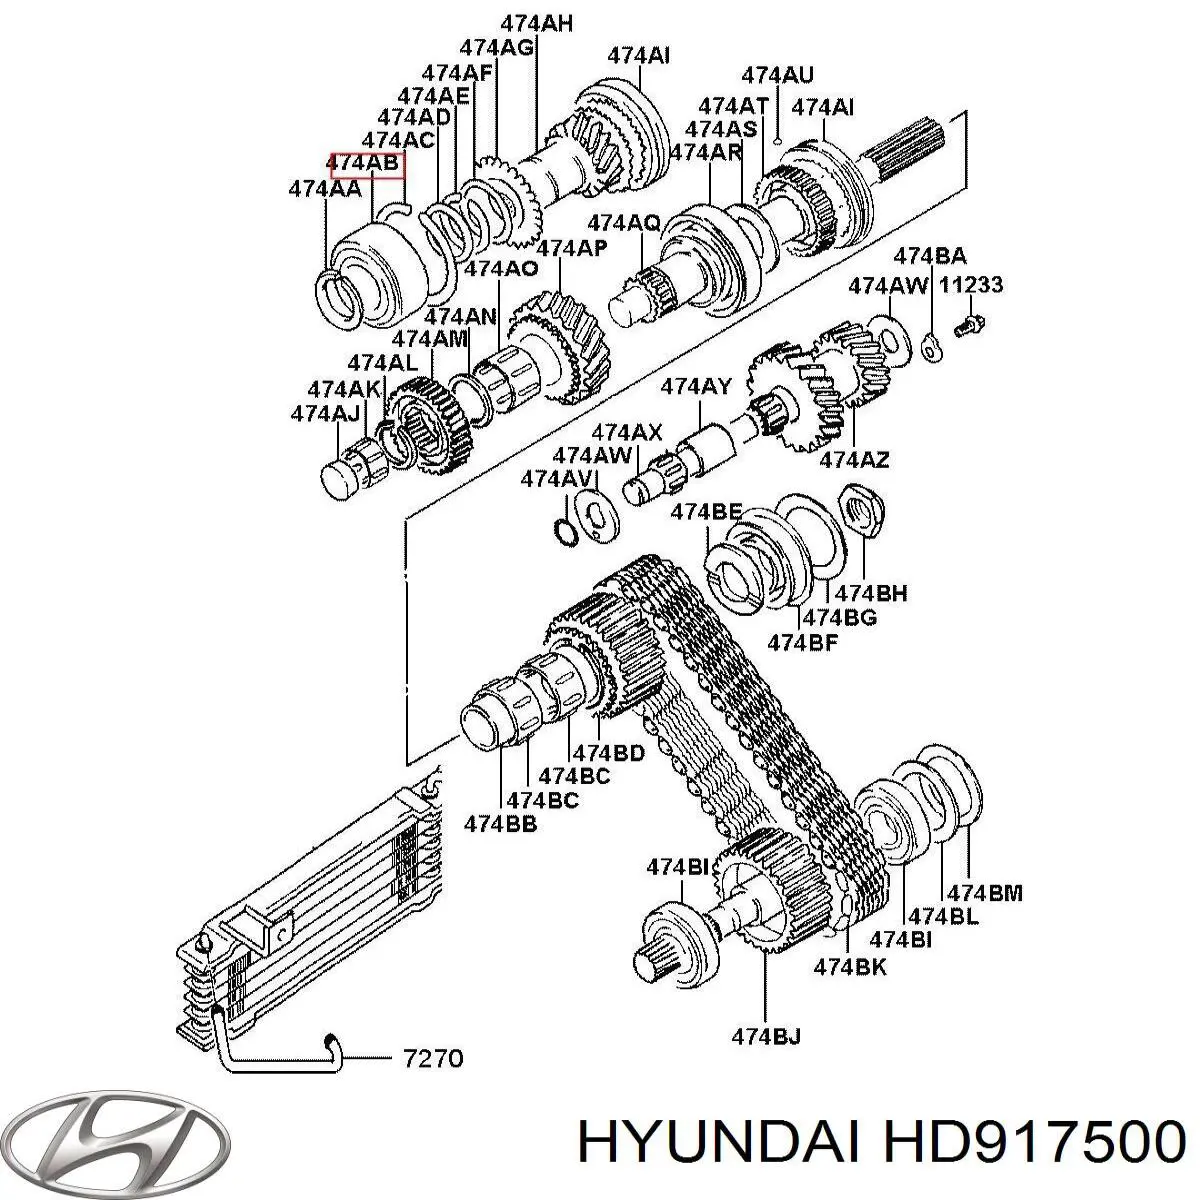 HD917500 Hyundai/Kia подшипник раздаточной коробки, входной шестерни